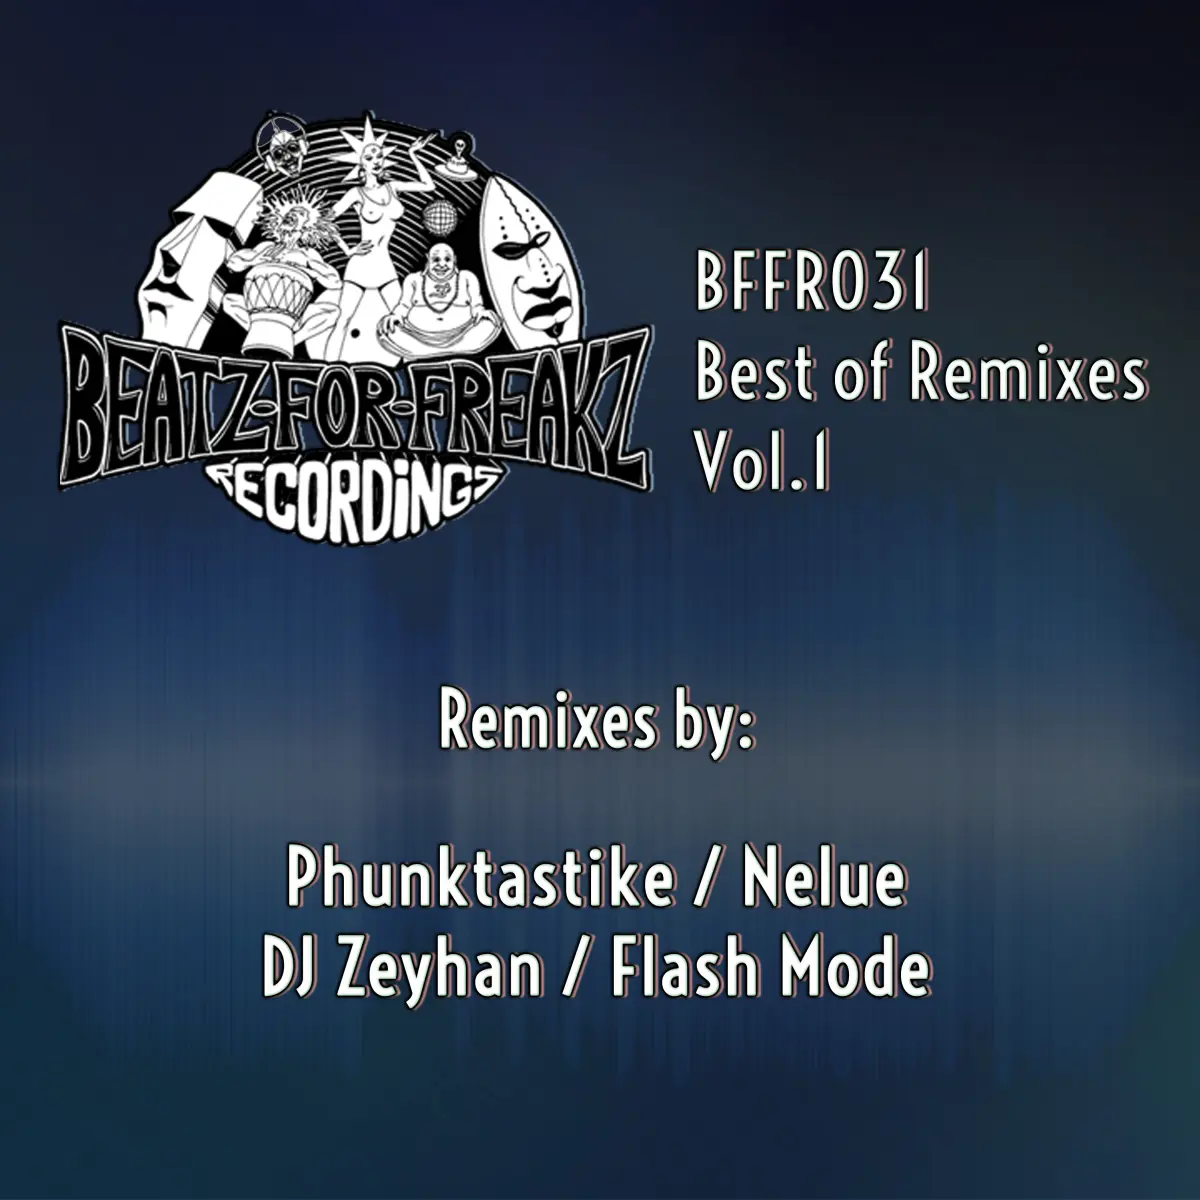 BFFR031 - Various Artists - The Best of Remixes Vol. 1